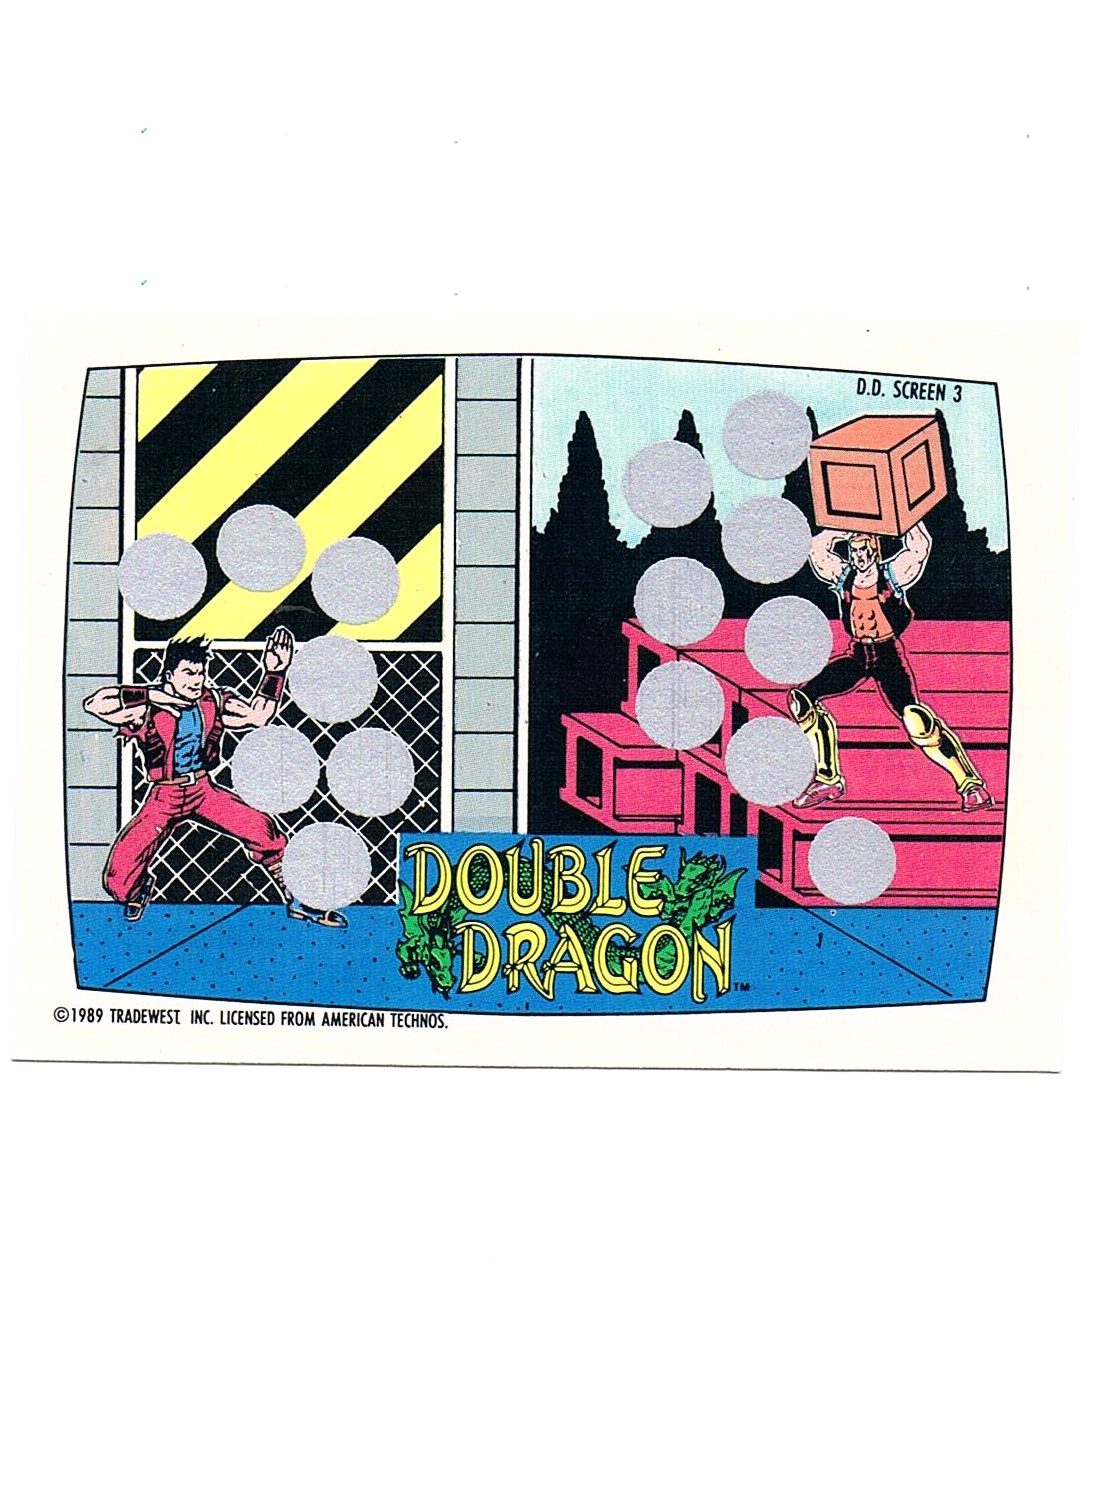 Double Dragon - NES Rubbelkarte - Screen 3 Topps / Nintendo 1989